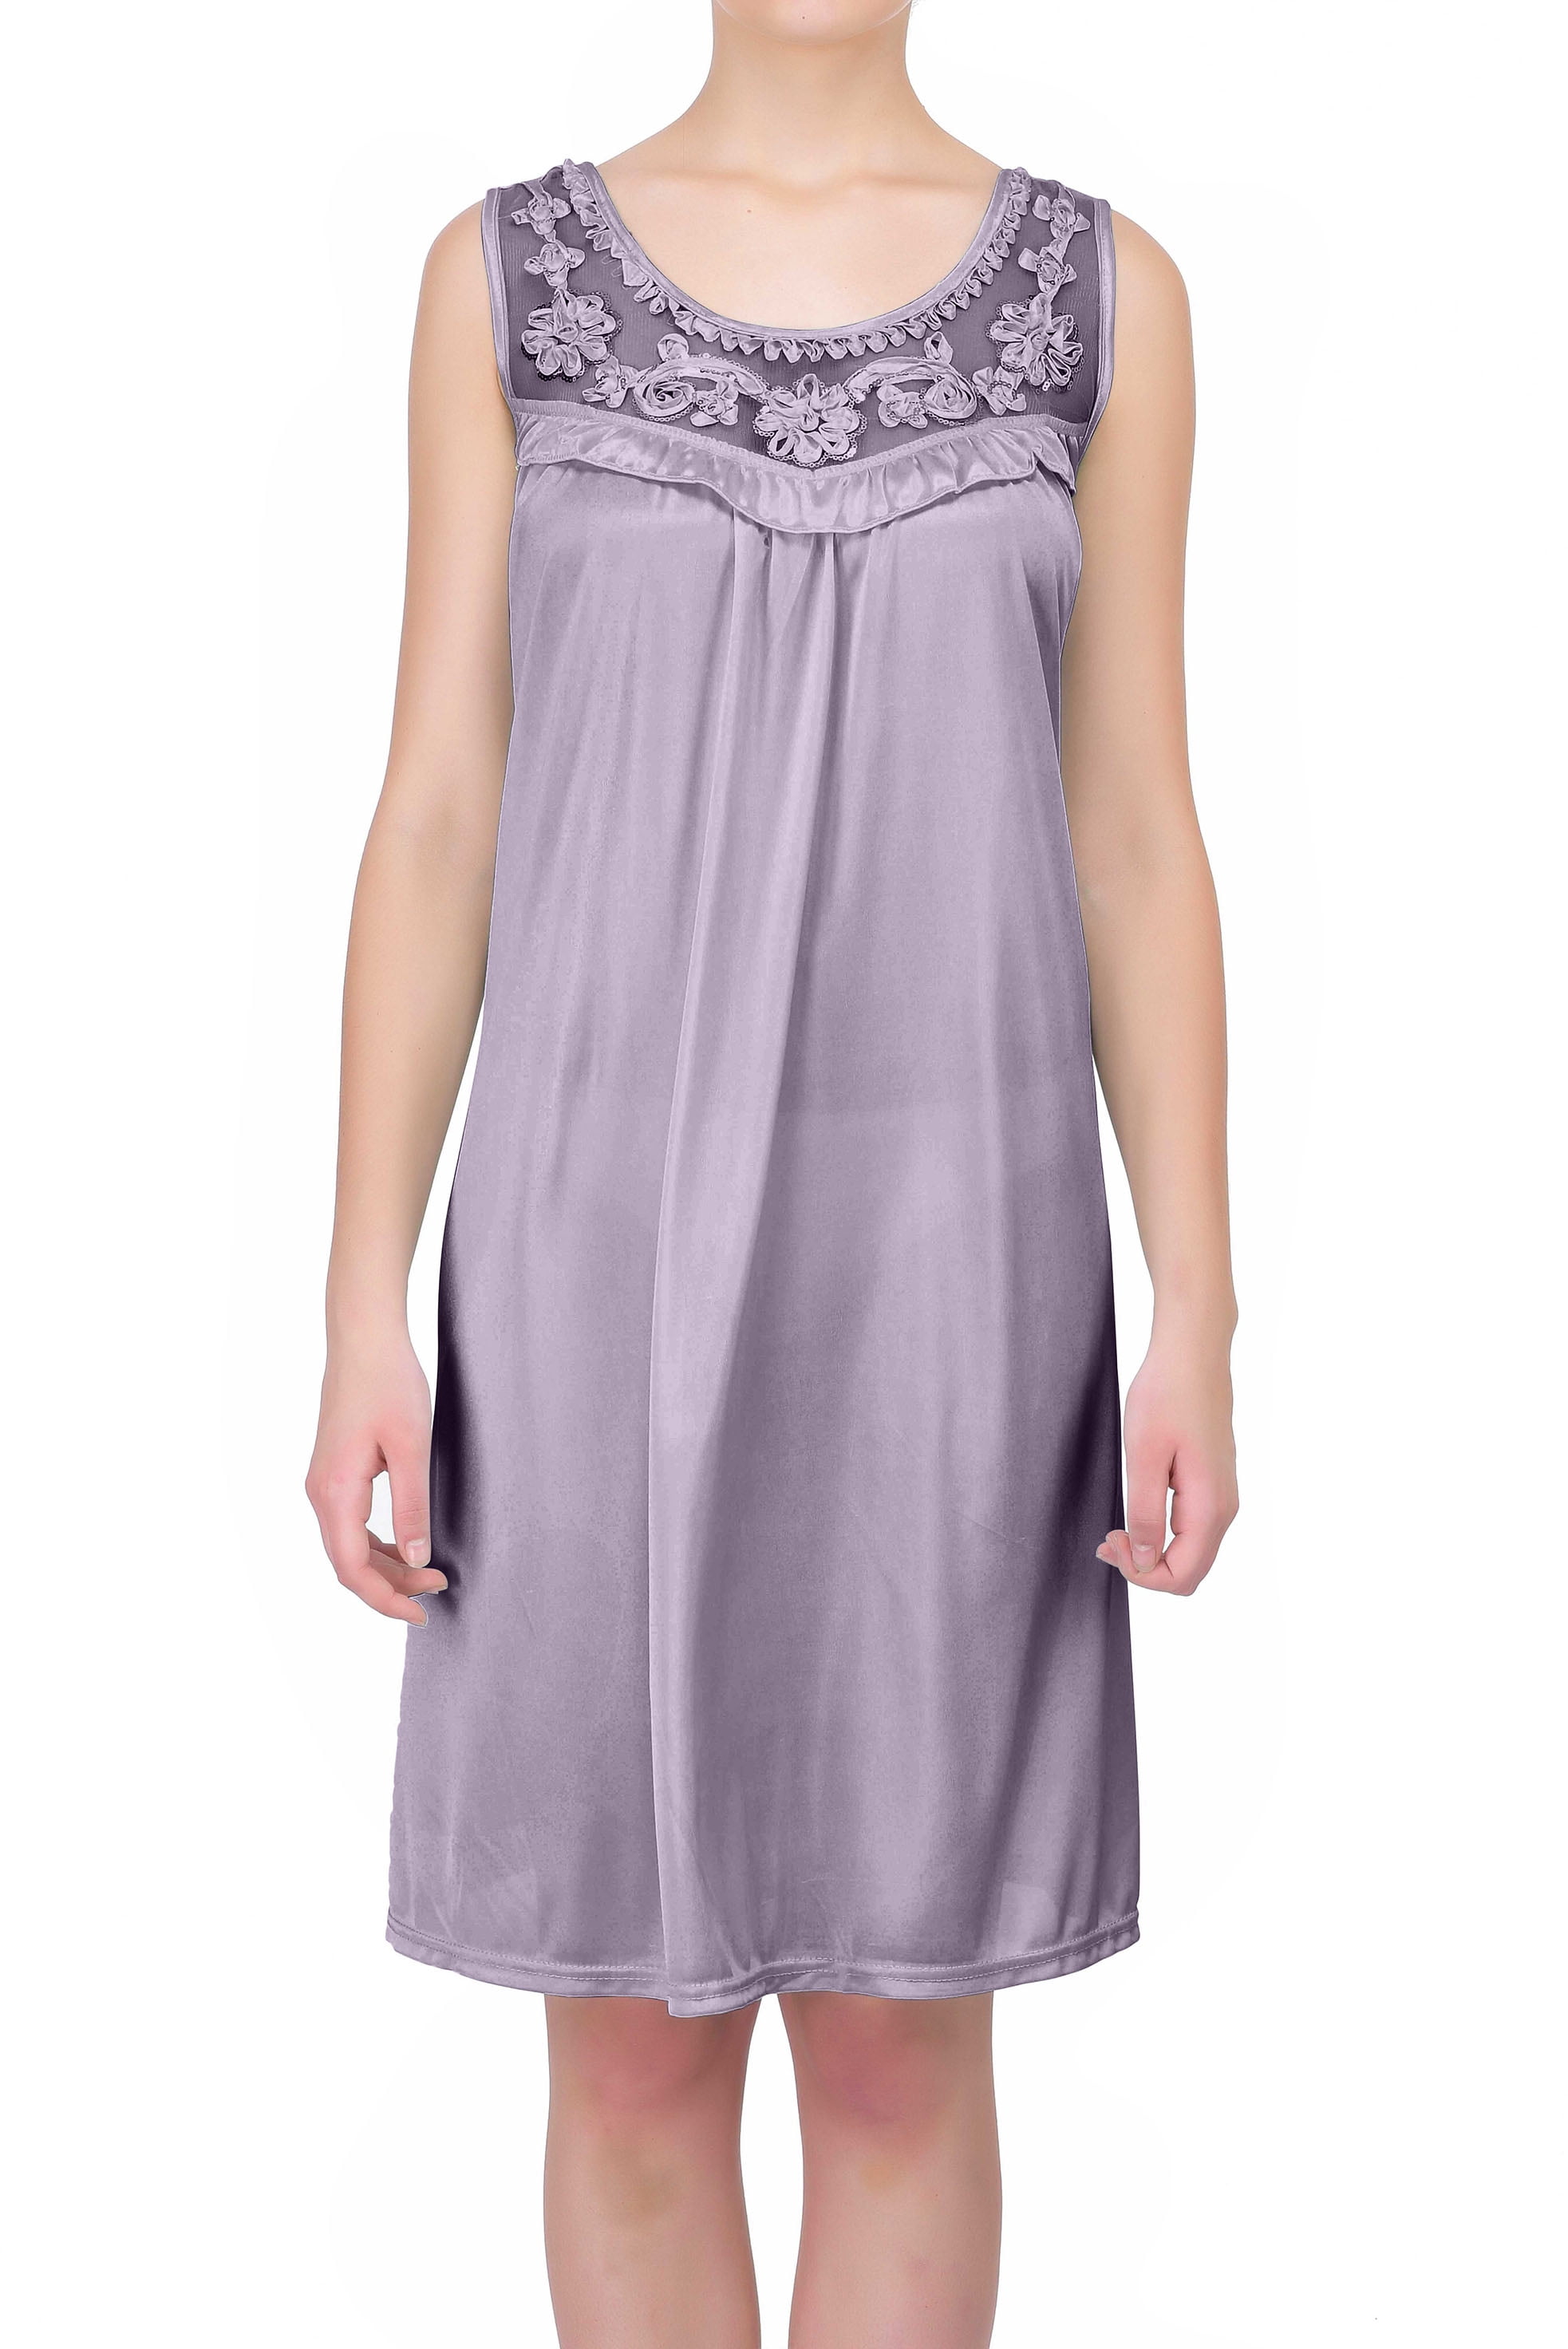 Ezi Women S Sheer Silky Sleeveless Nightgown